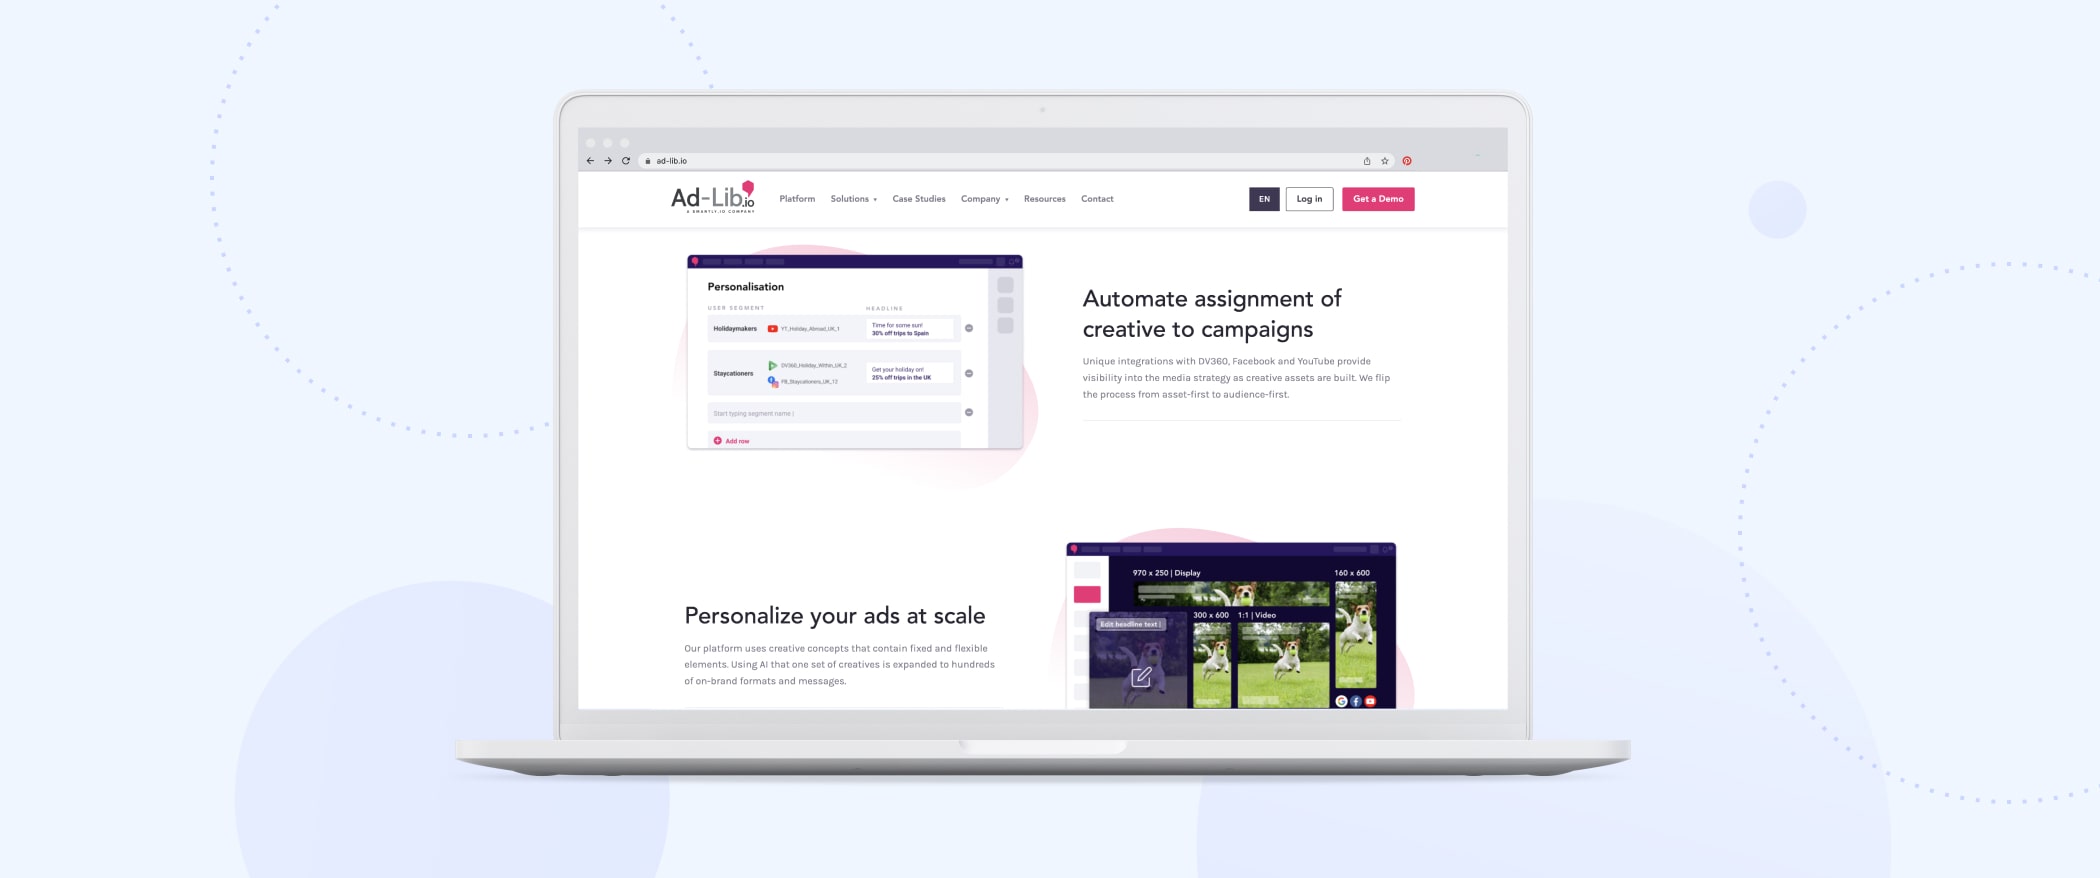 AdLib-Adtech startup